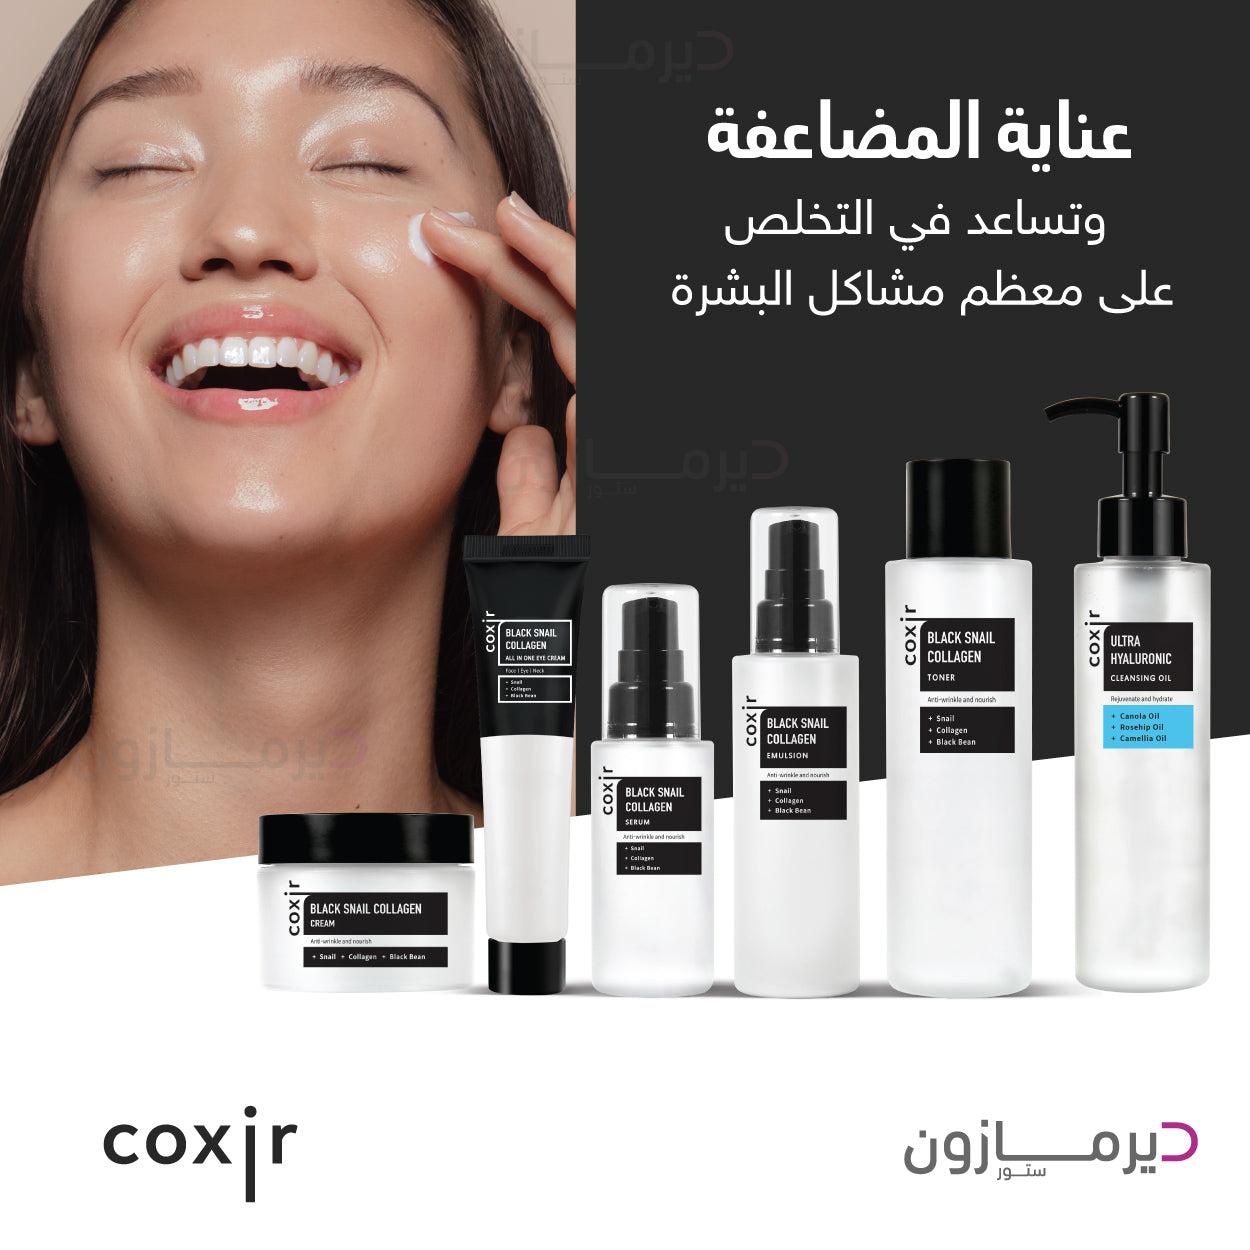 Coxir Bundle - Extra Skin Care